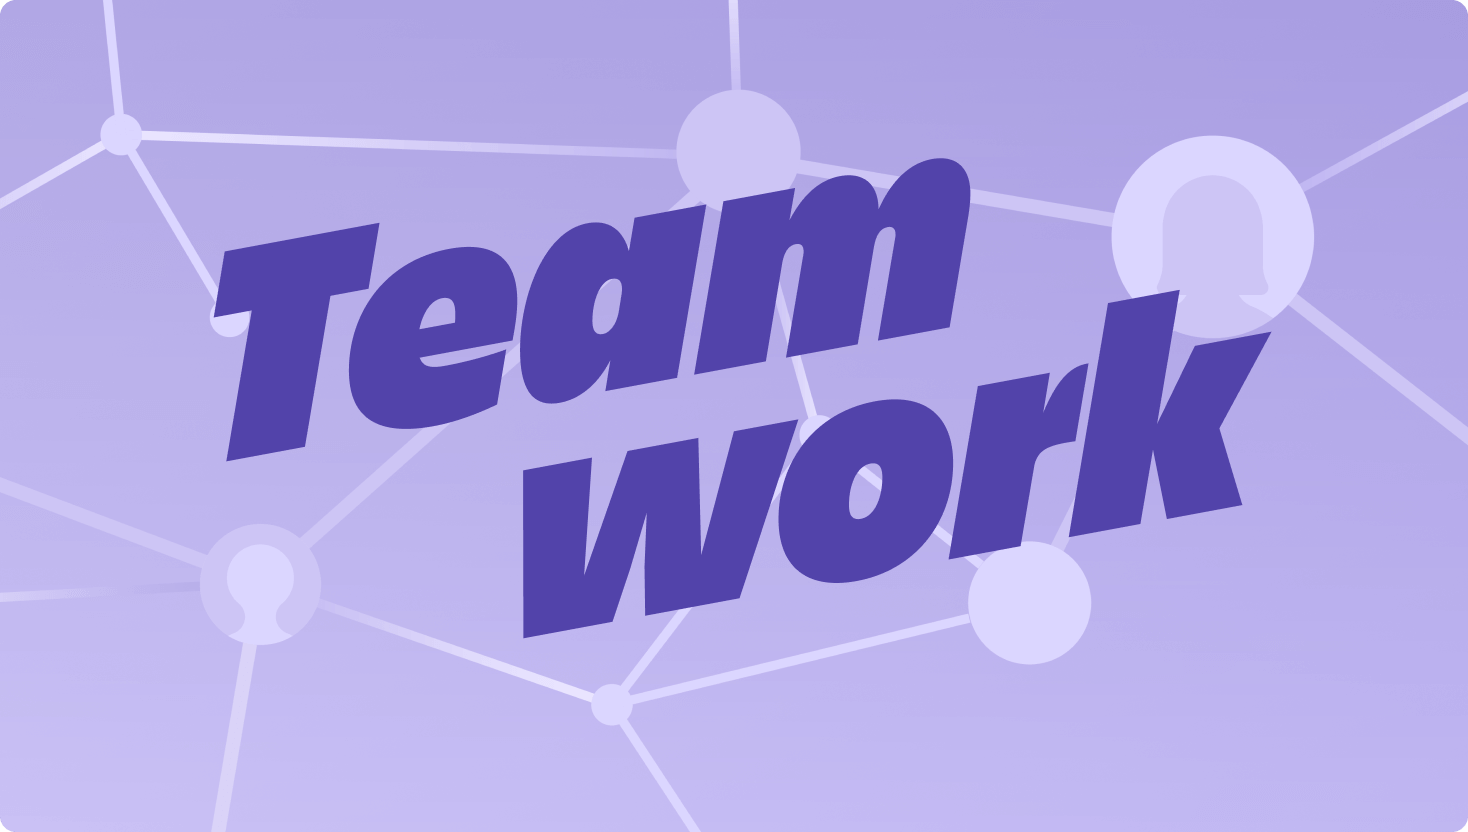 Teamwork라는 단어가 눈에 띄게 표시되었으며 네트워크에서 노드를 연결하는 보라색 이미지